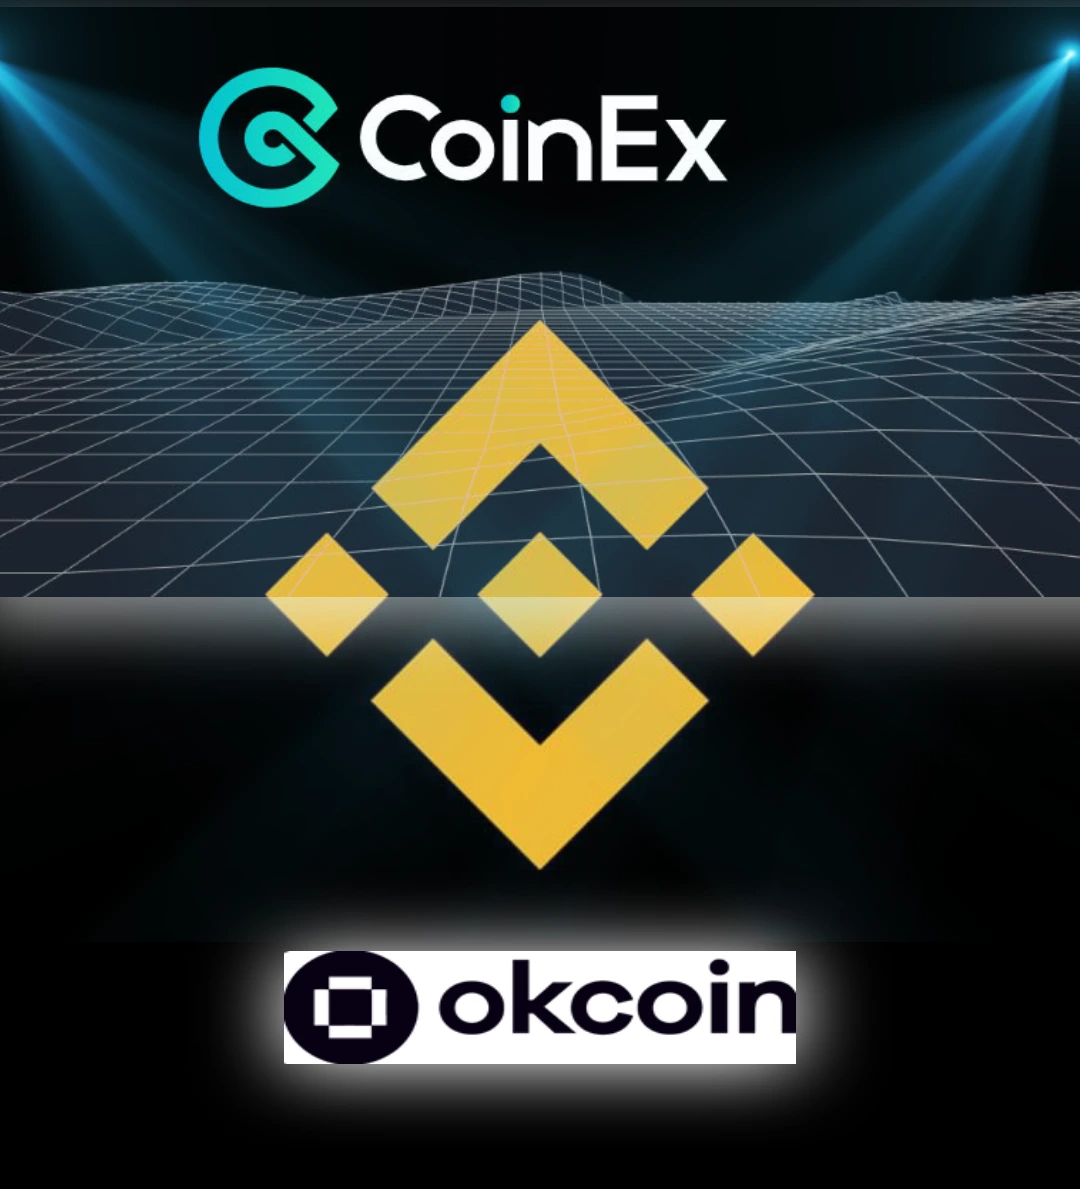 Binancecoinex okcoin Crypto news